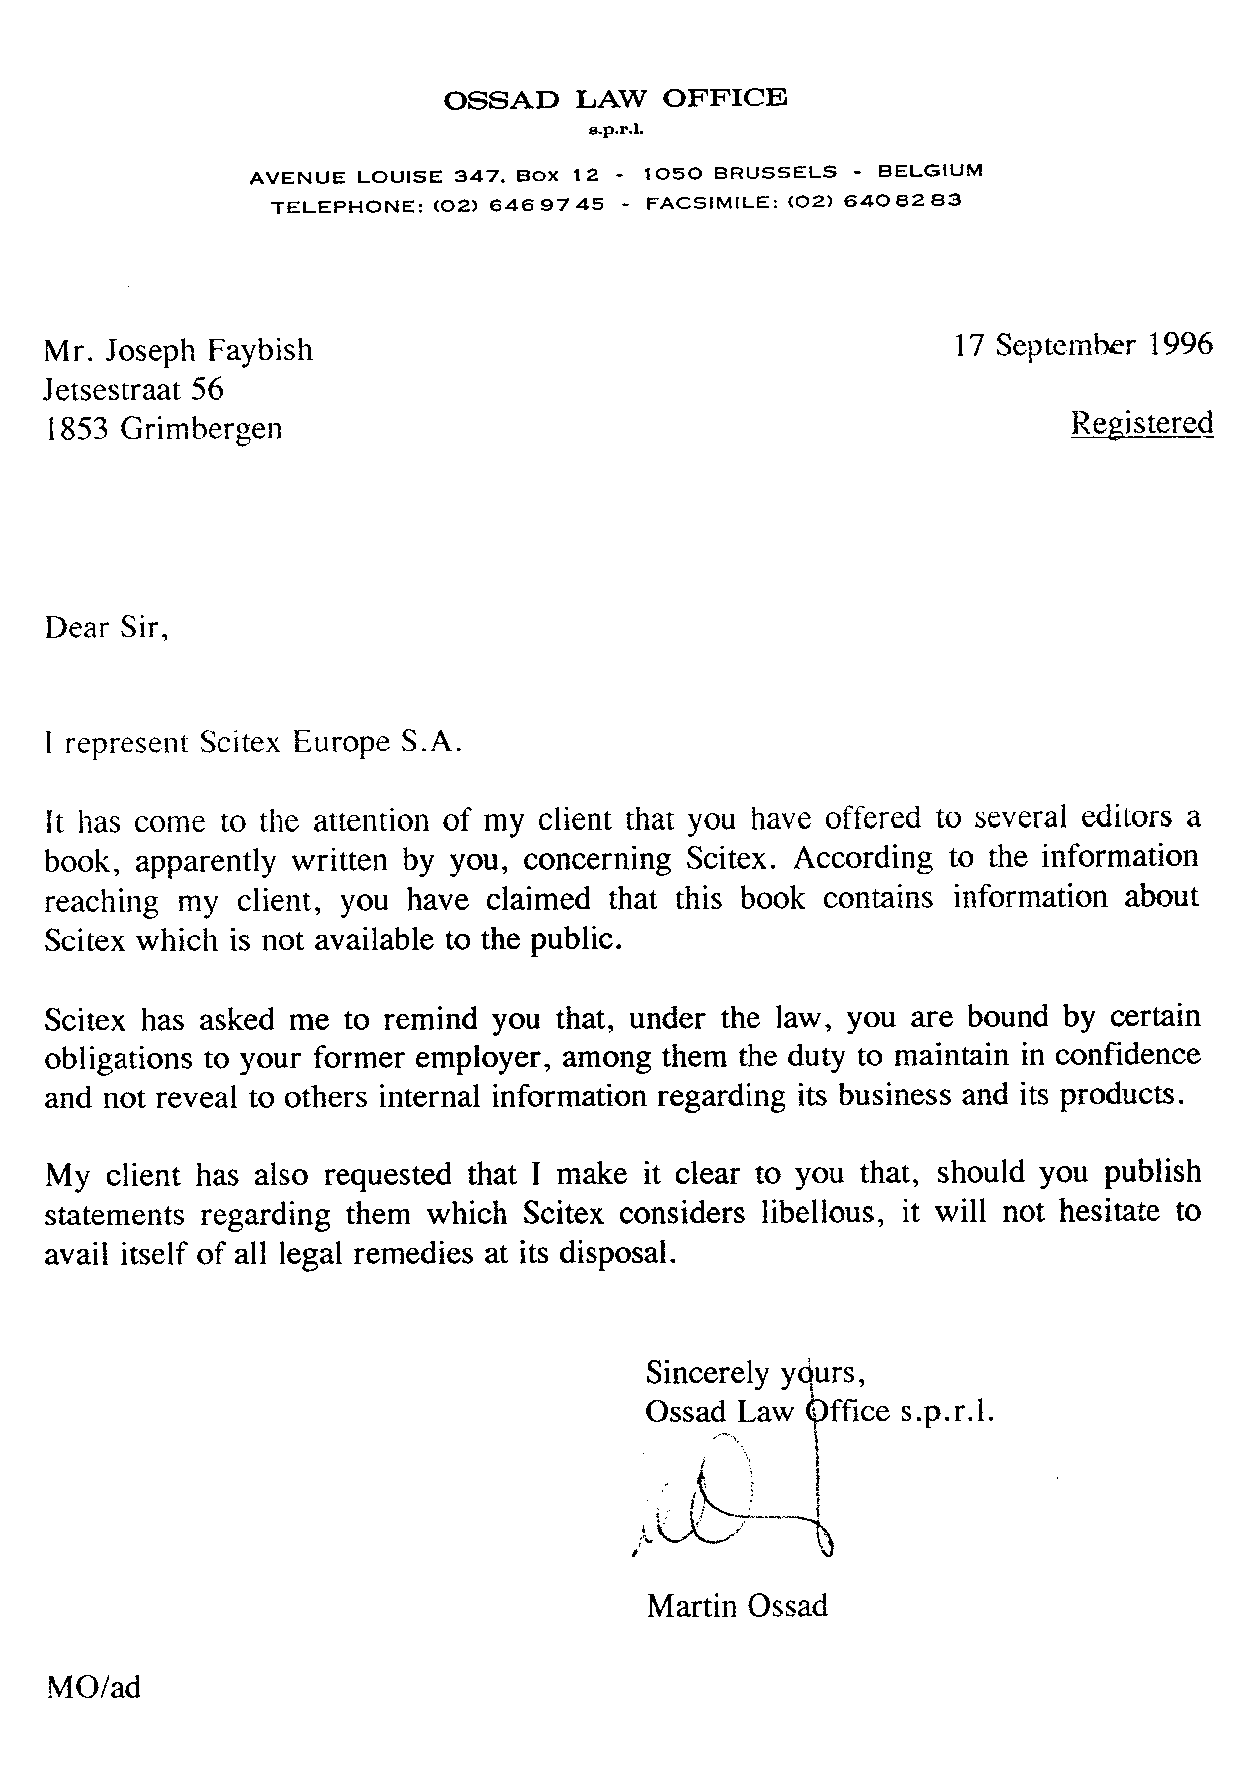 threat letter